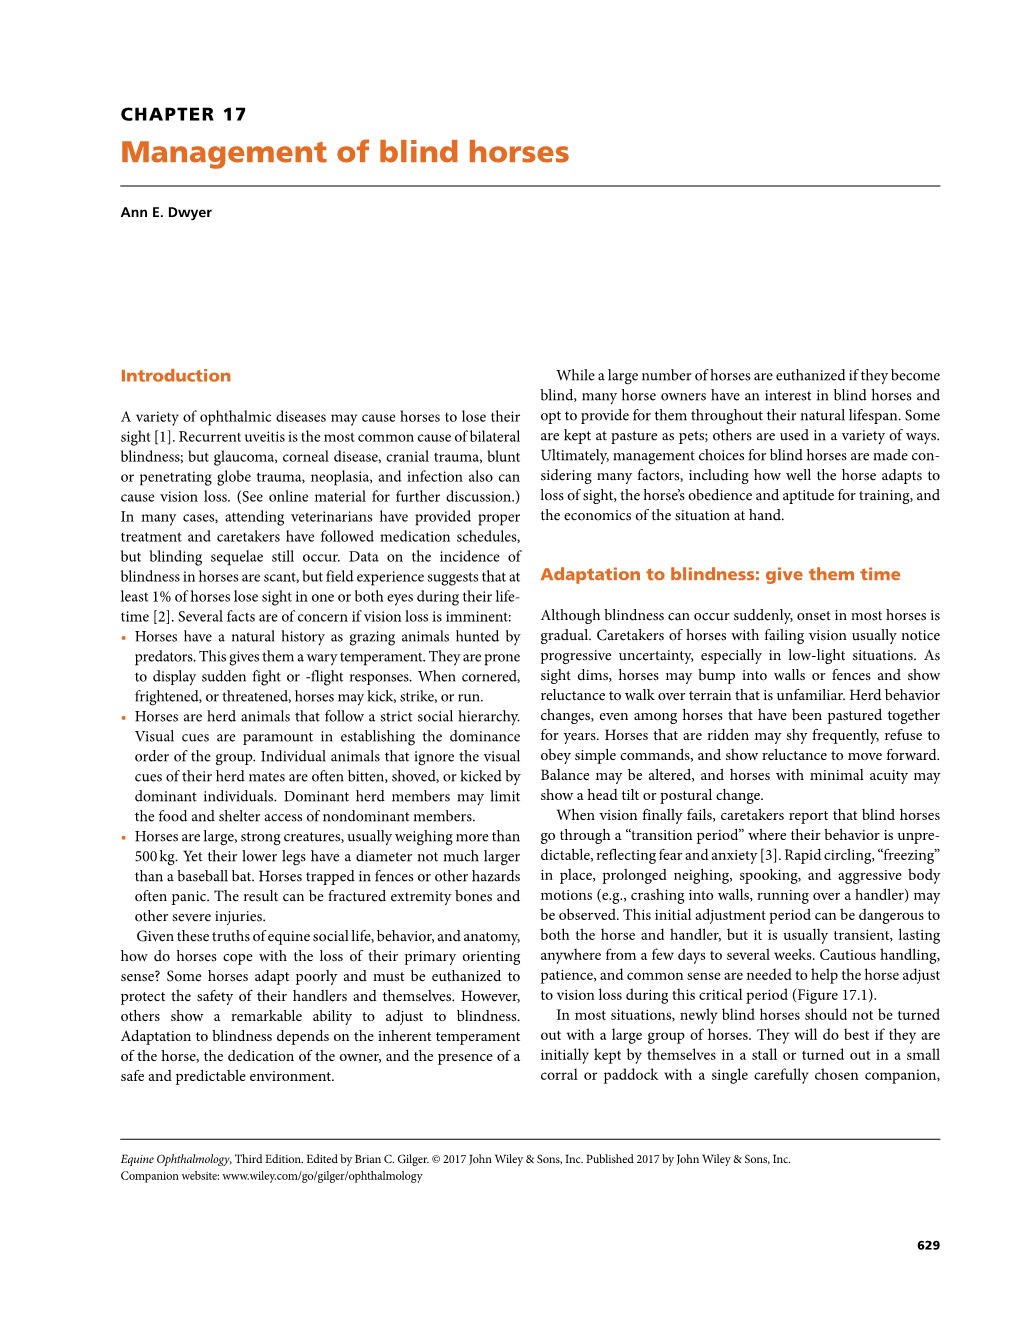 Management of Blind Horses